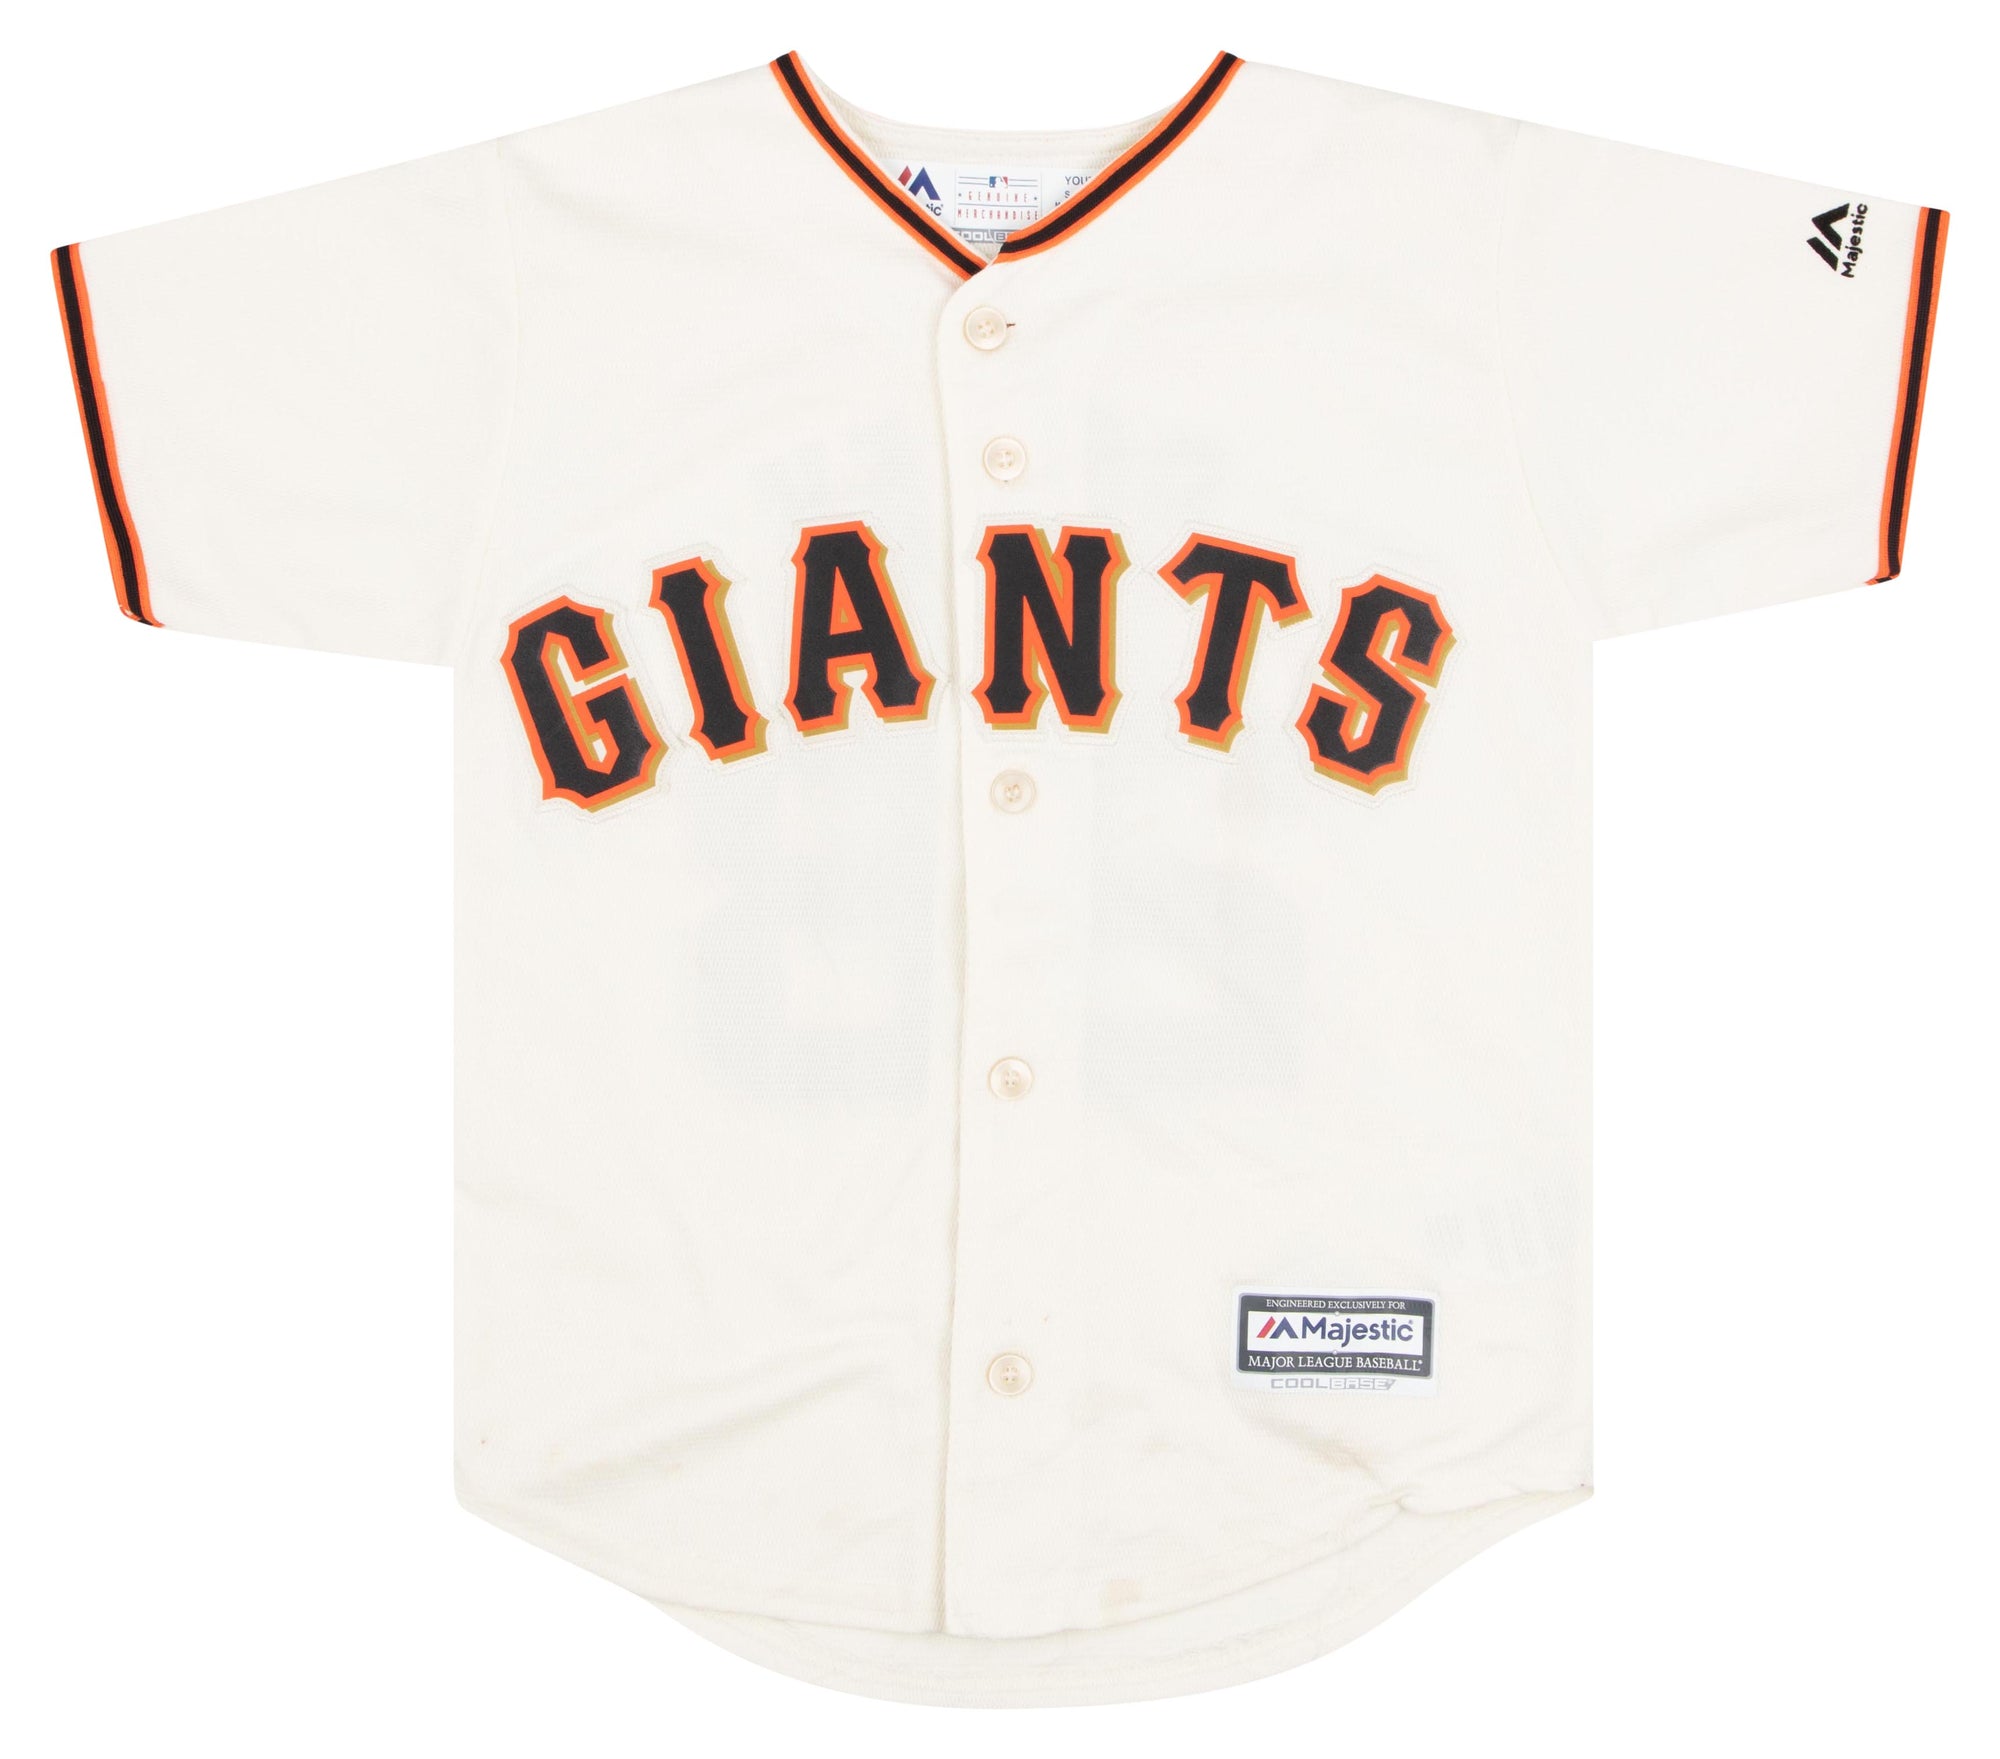 San Francisco Giants Jerseys in San Francisco Giants Team Shop